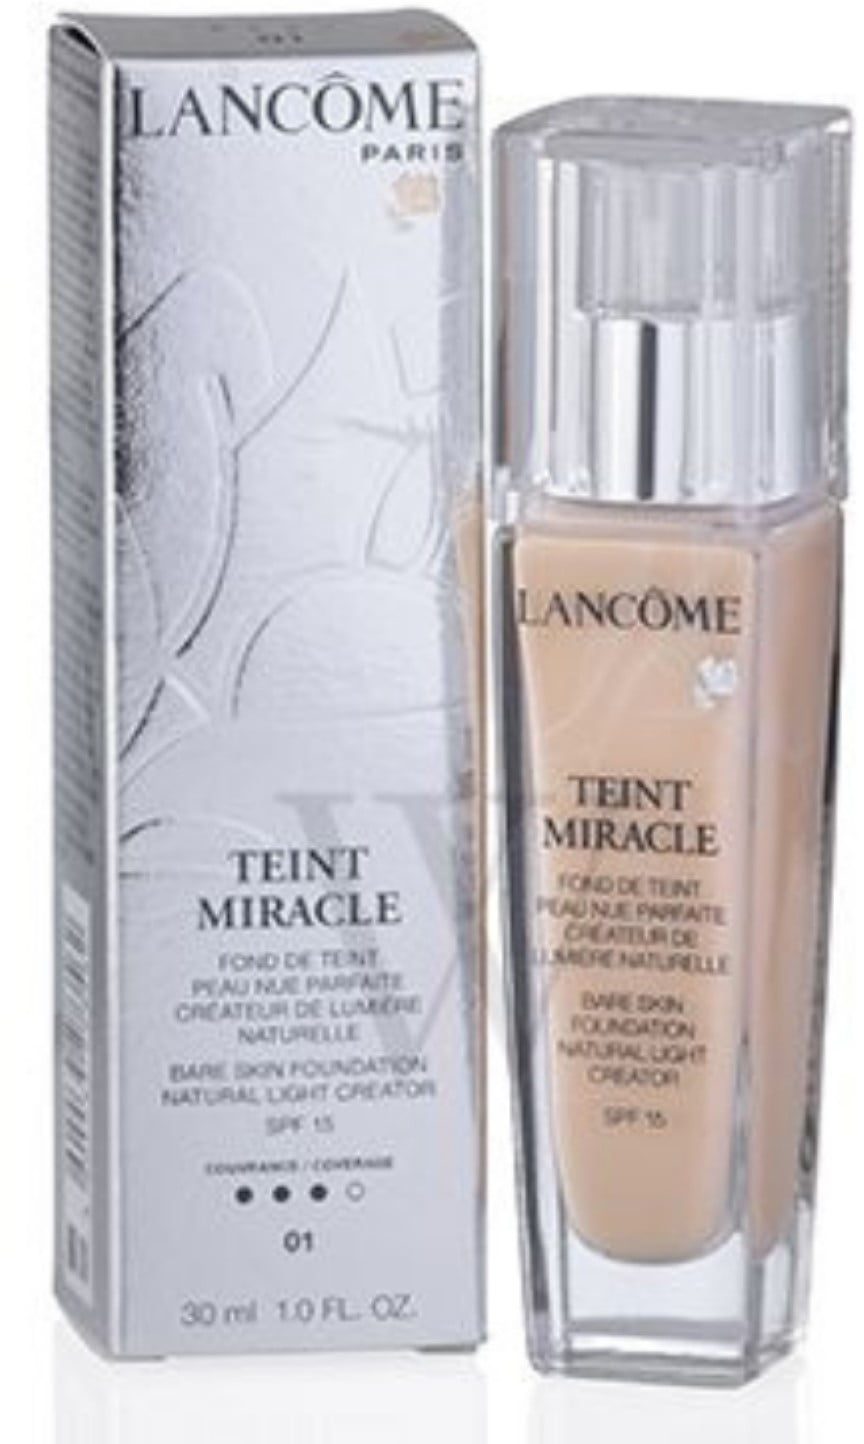 Lancome Teint Miracle Bare Skin Foundation Natural Light SPF 15 [#01] Beige Albatre oz - Walmart.com